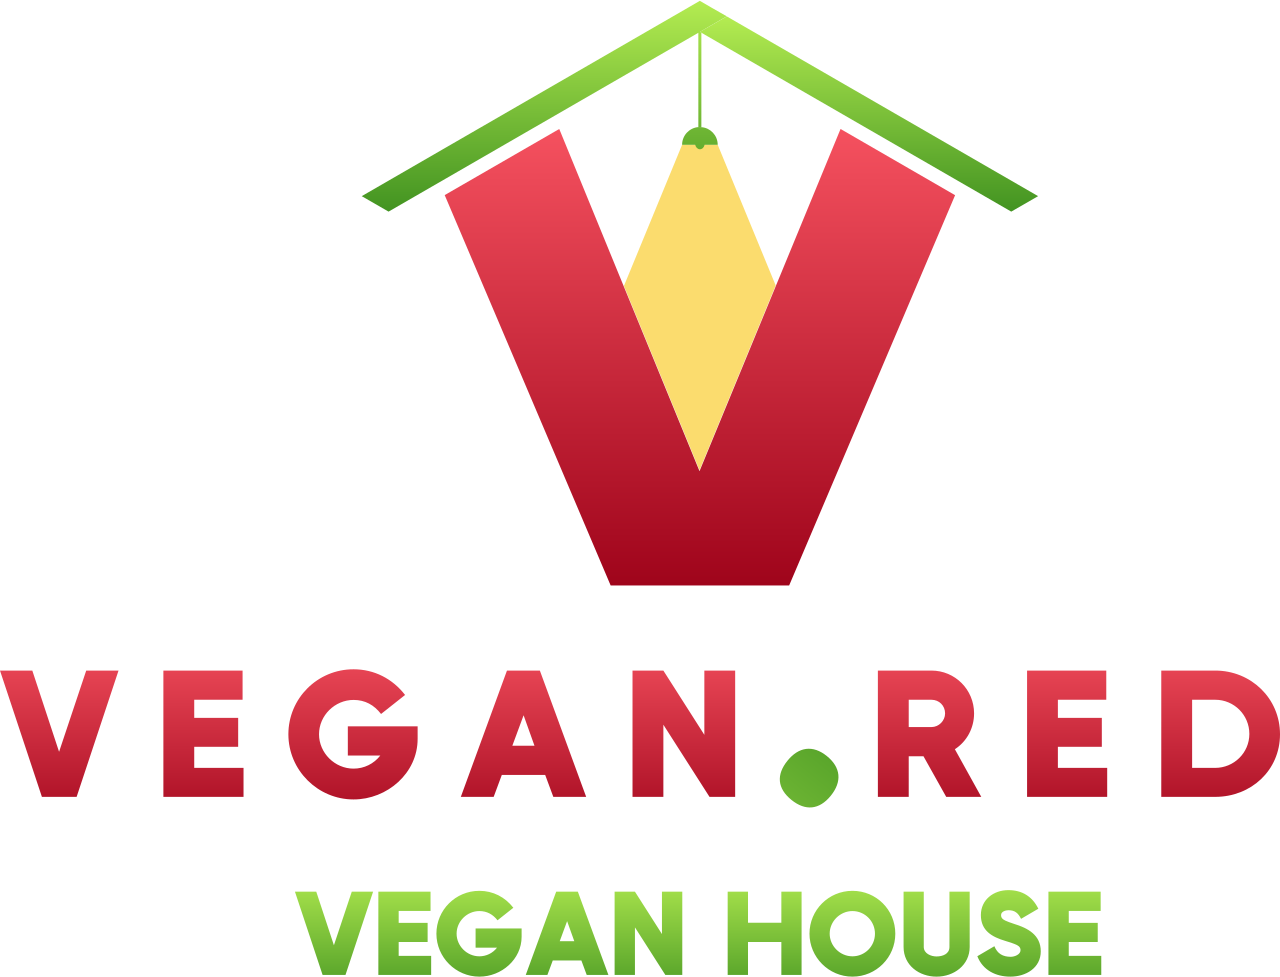 Vegan House Blog 's web page